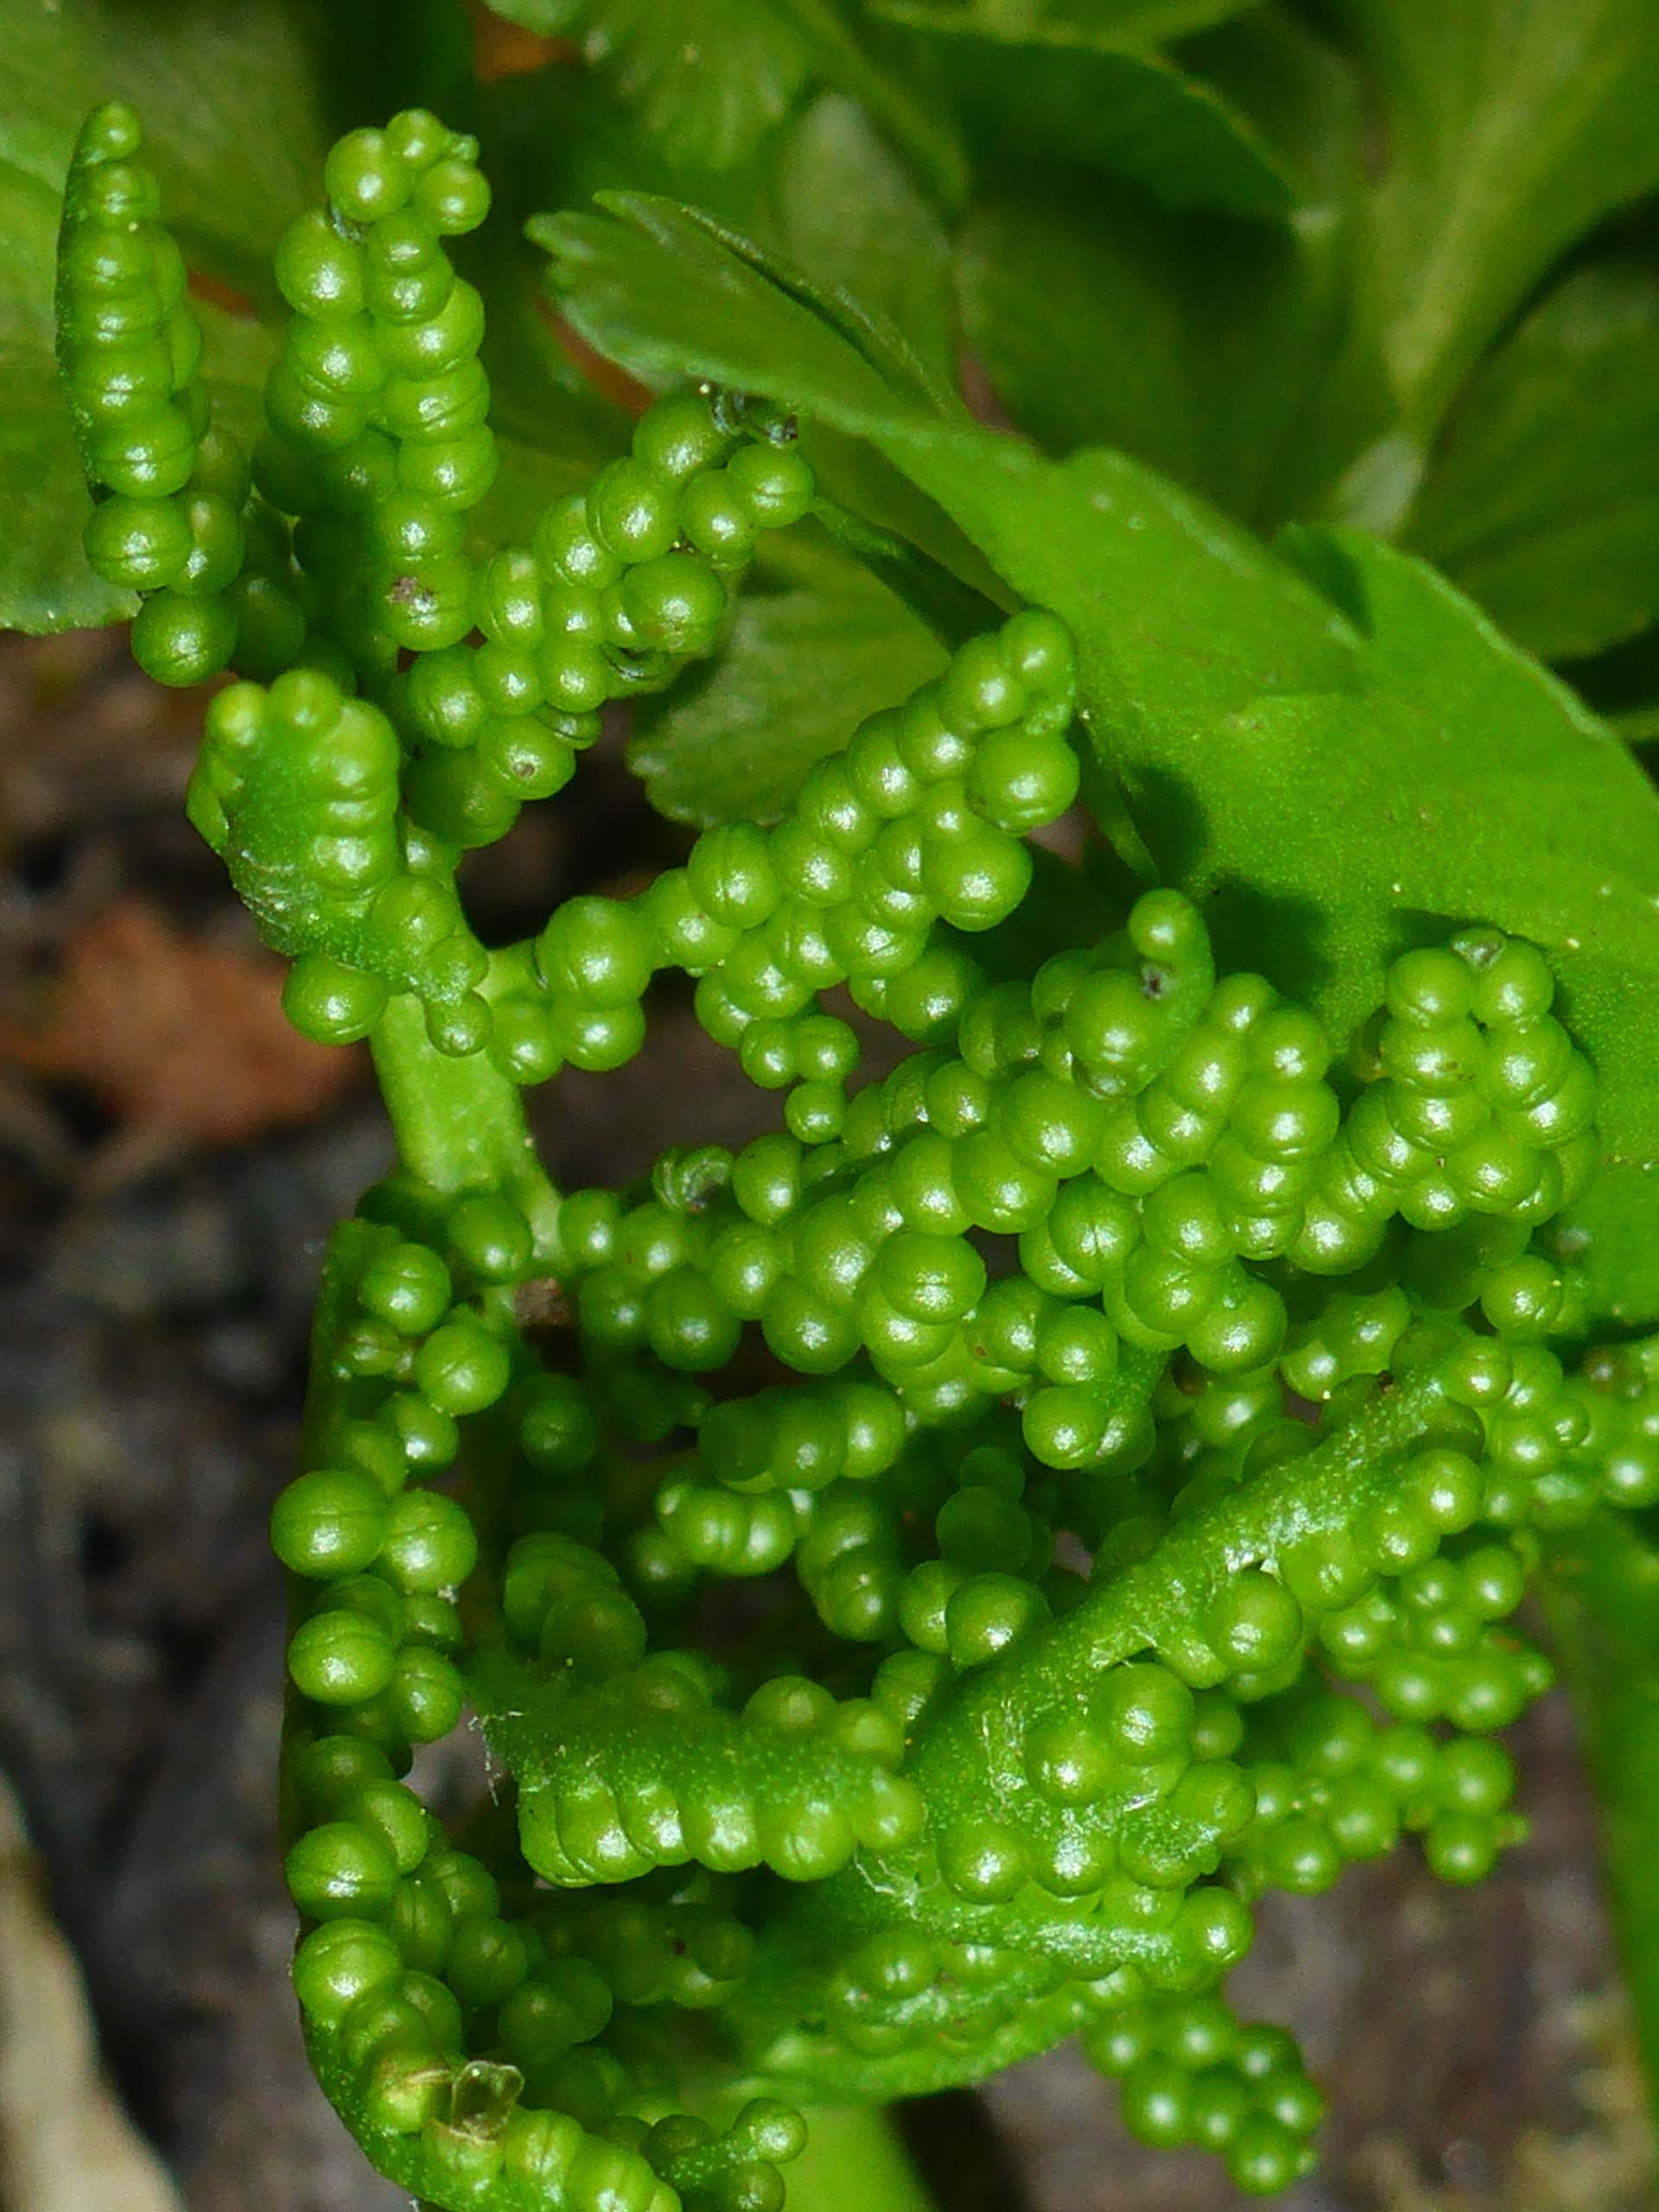 Leather grape fern spore-bearing frond close-up. D. Burk.